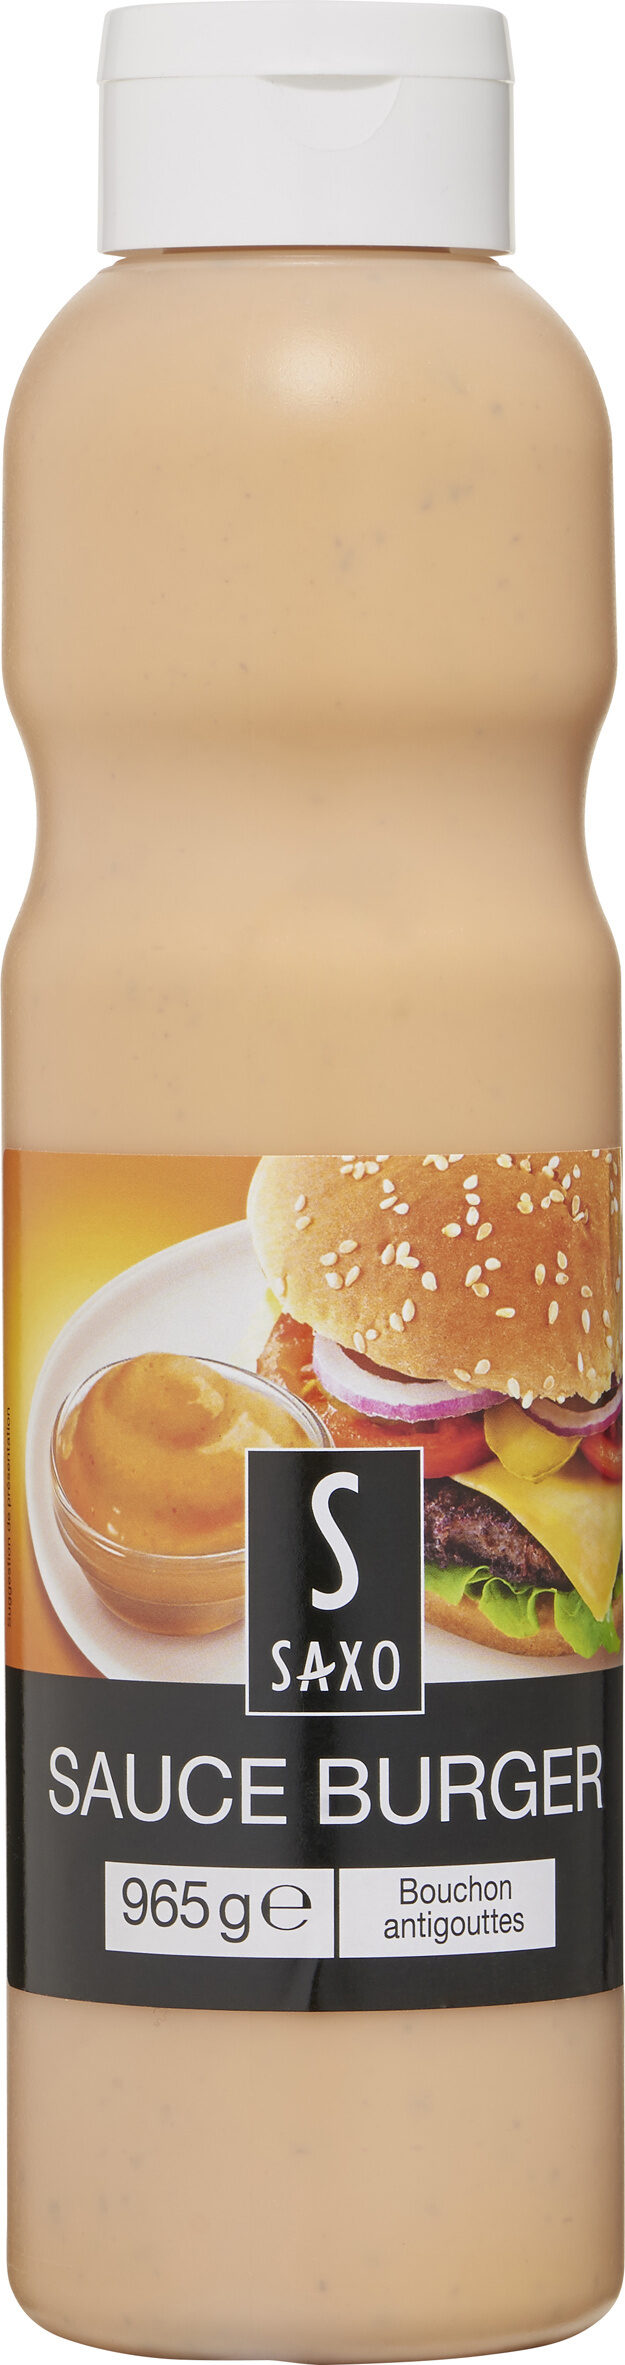 Sauce Hamburger. saxo - Produit